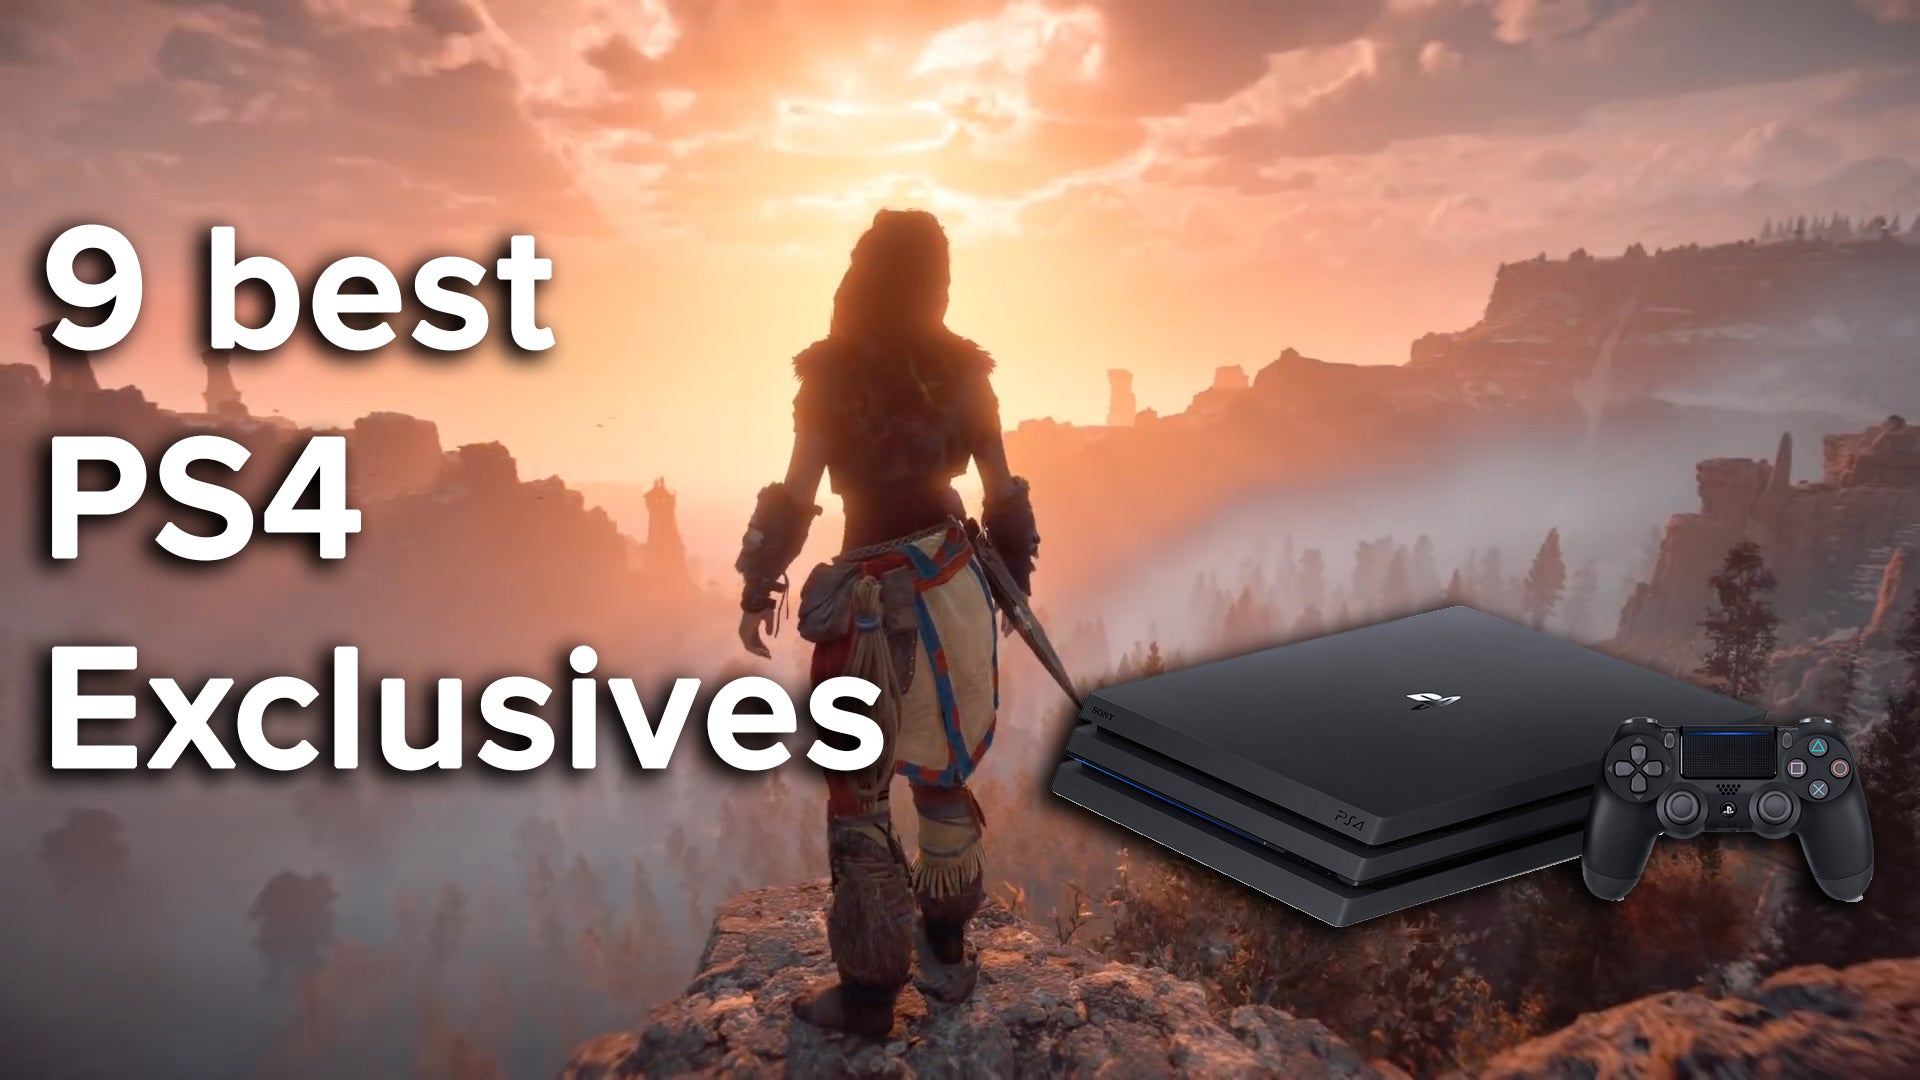 9 best PS4 exclusives |